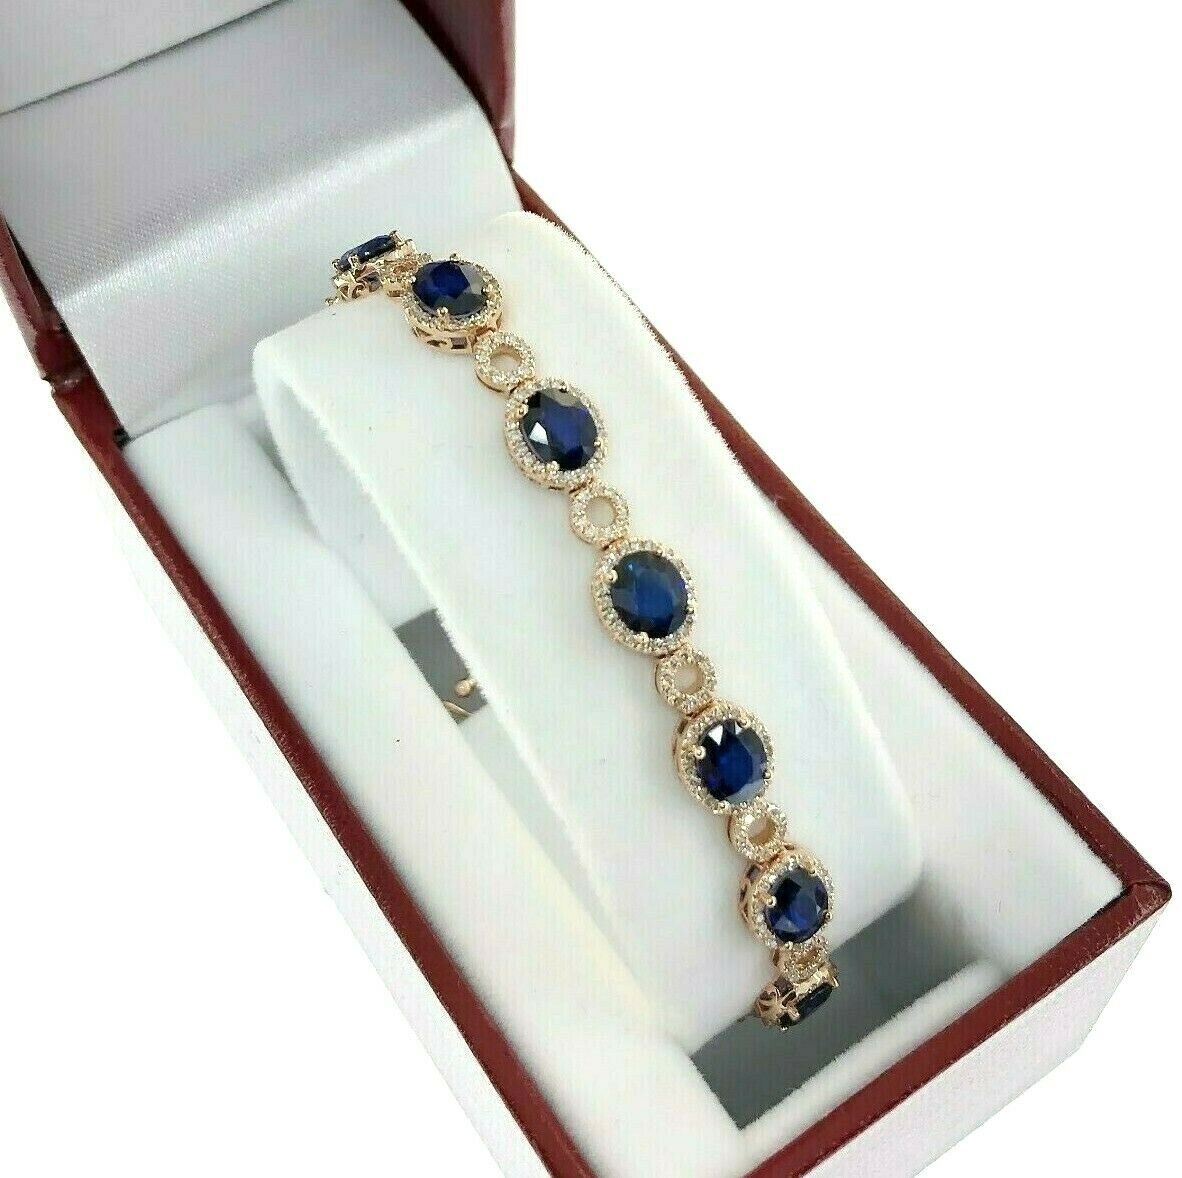 10.87 Carats Blue Sapphire and Diamond Halo Tennis Bracelet 14K Rose Gold